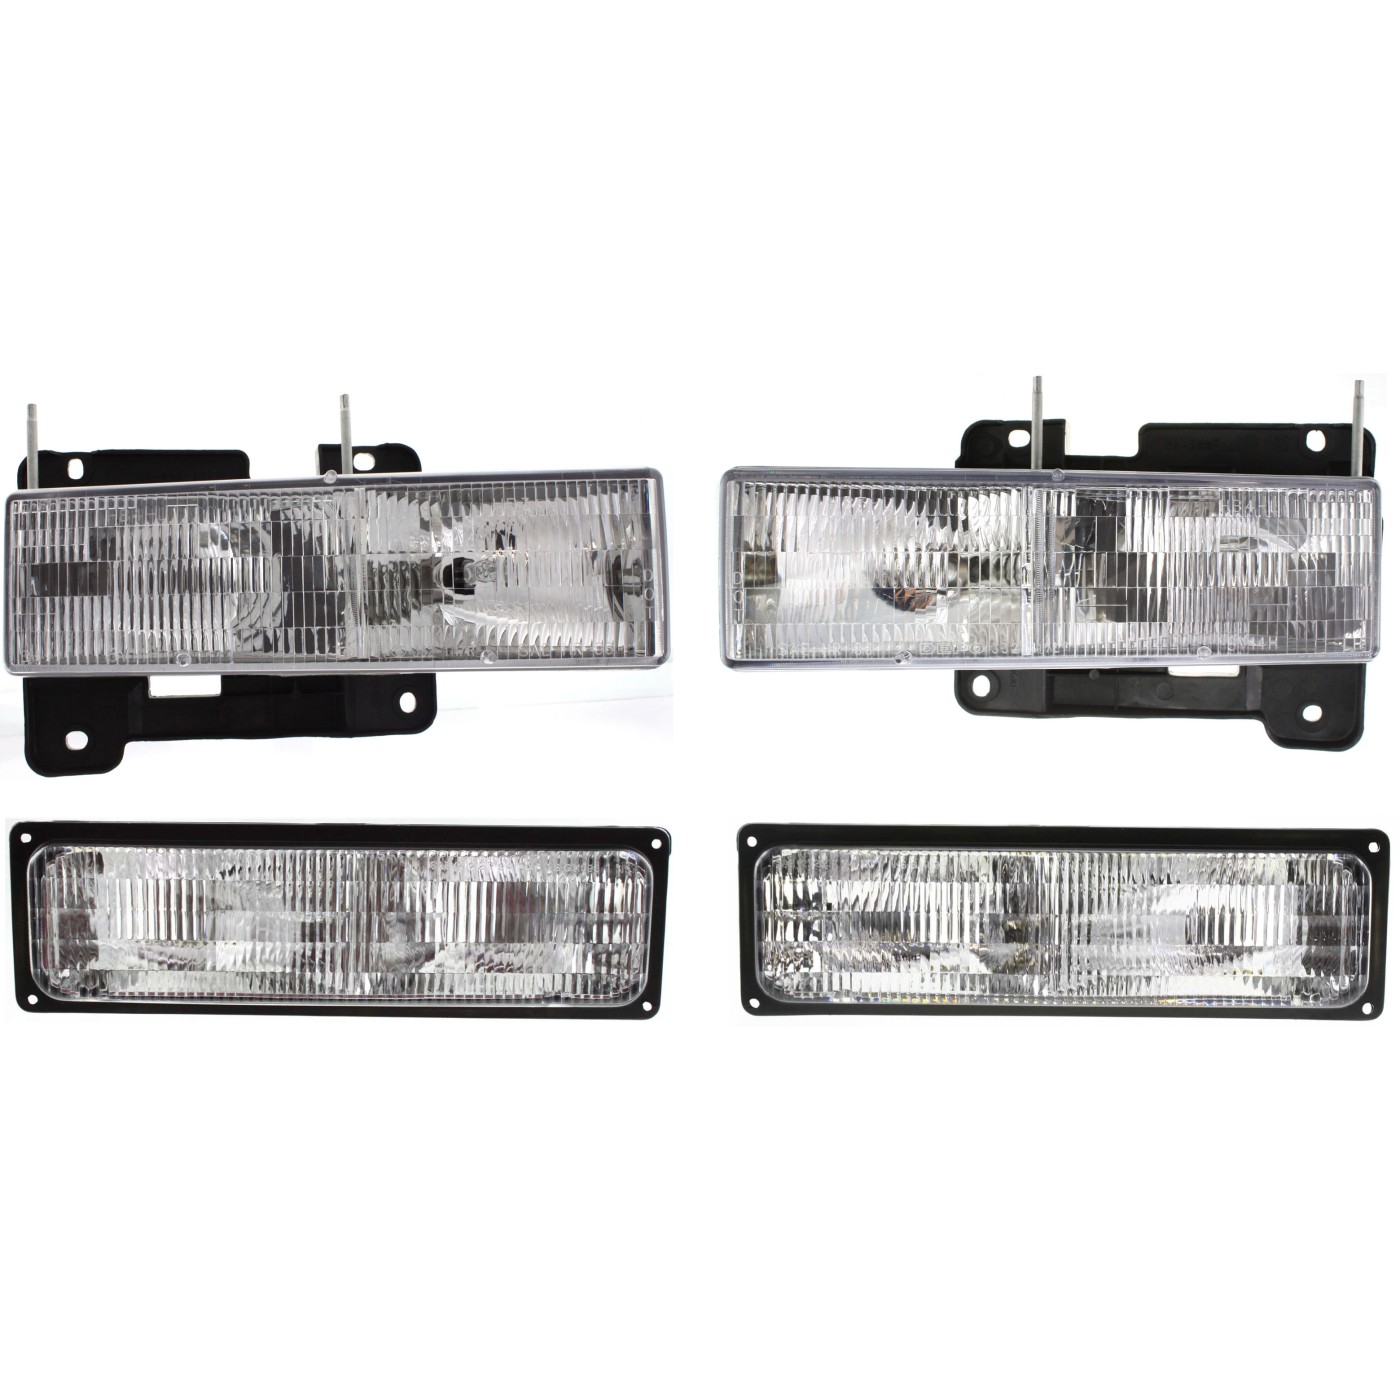 Headlights & Parking Signal Light Set Kit for 94-98 Chevy/GMC C1500 K1500 Truck 